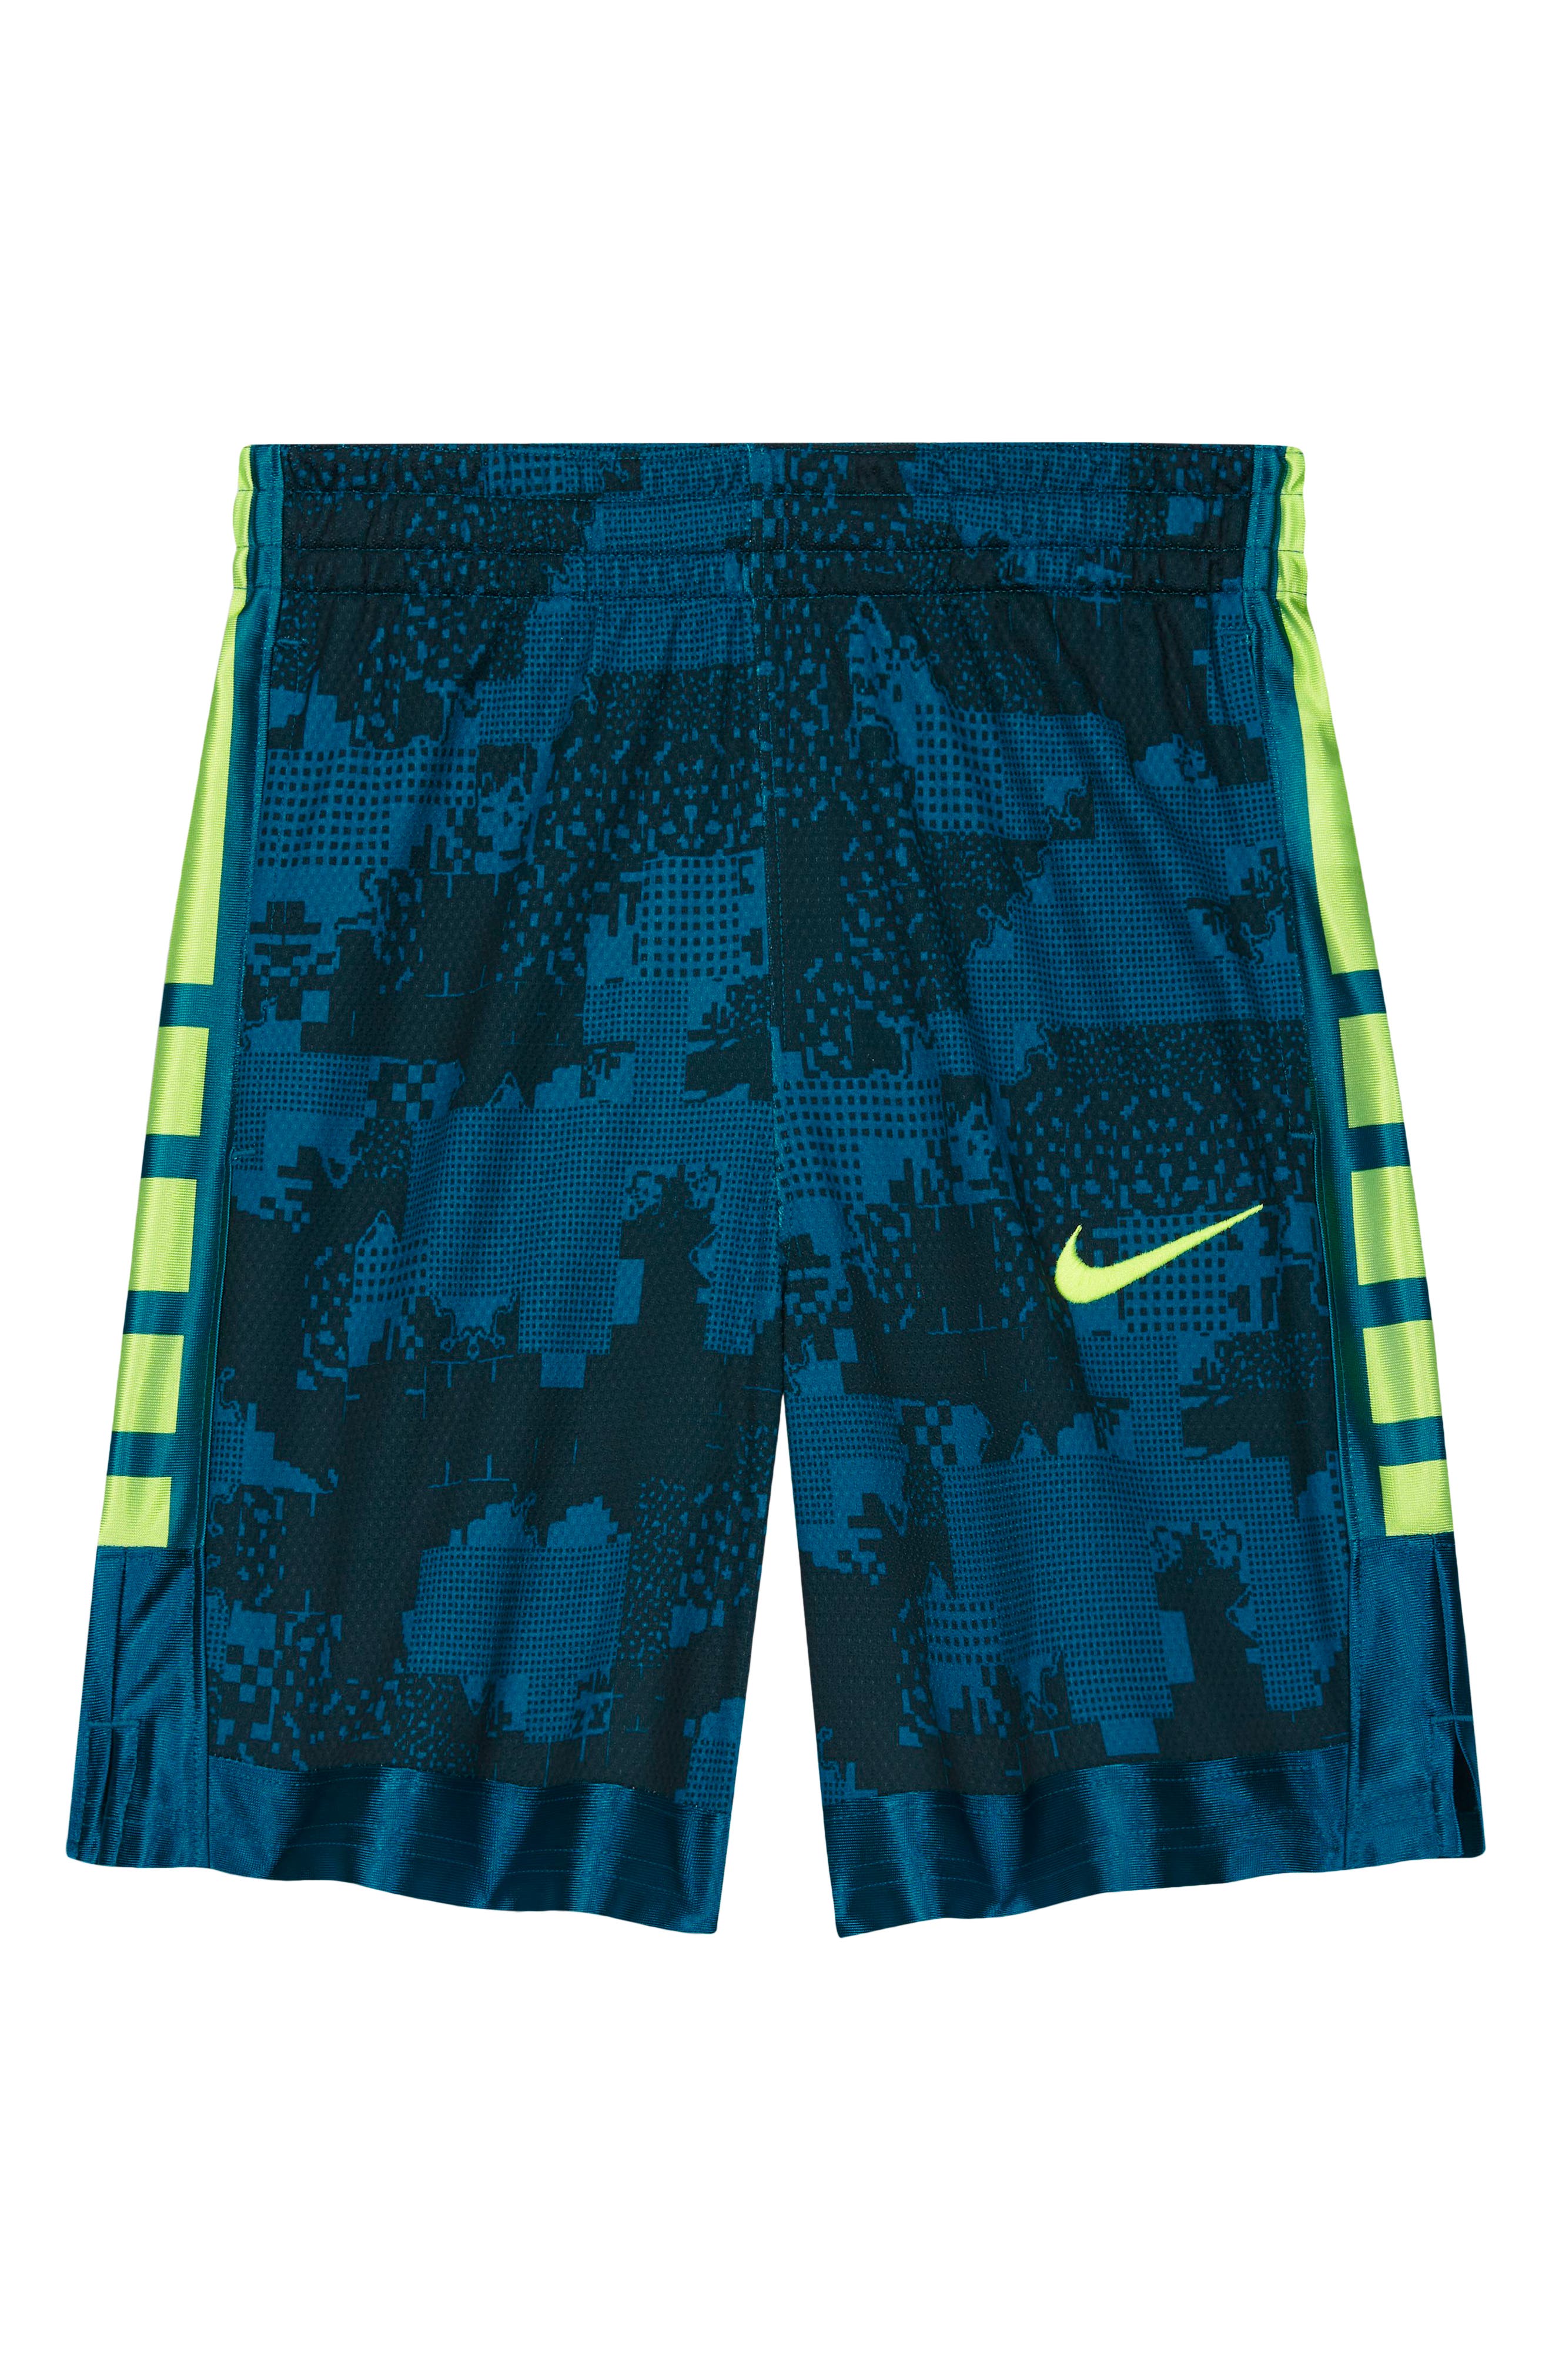 Boys' Nike Clothes (Sizes 2T-7): T 